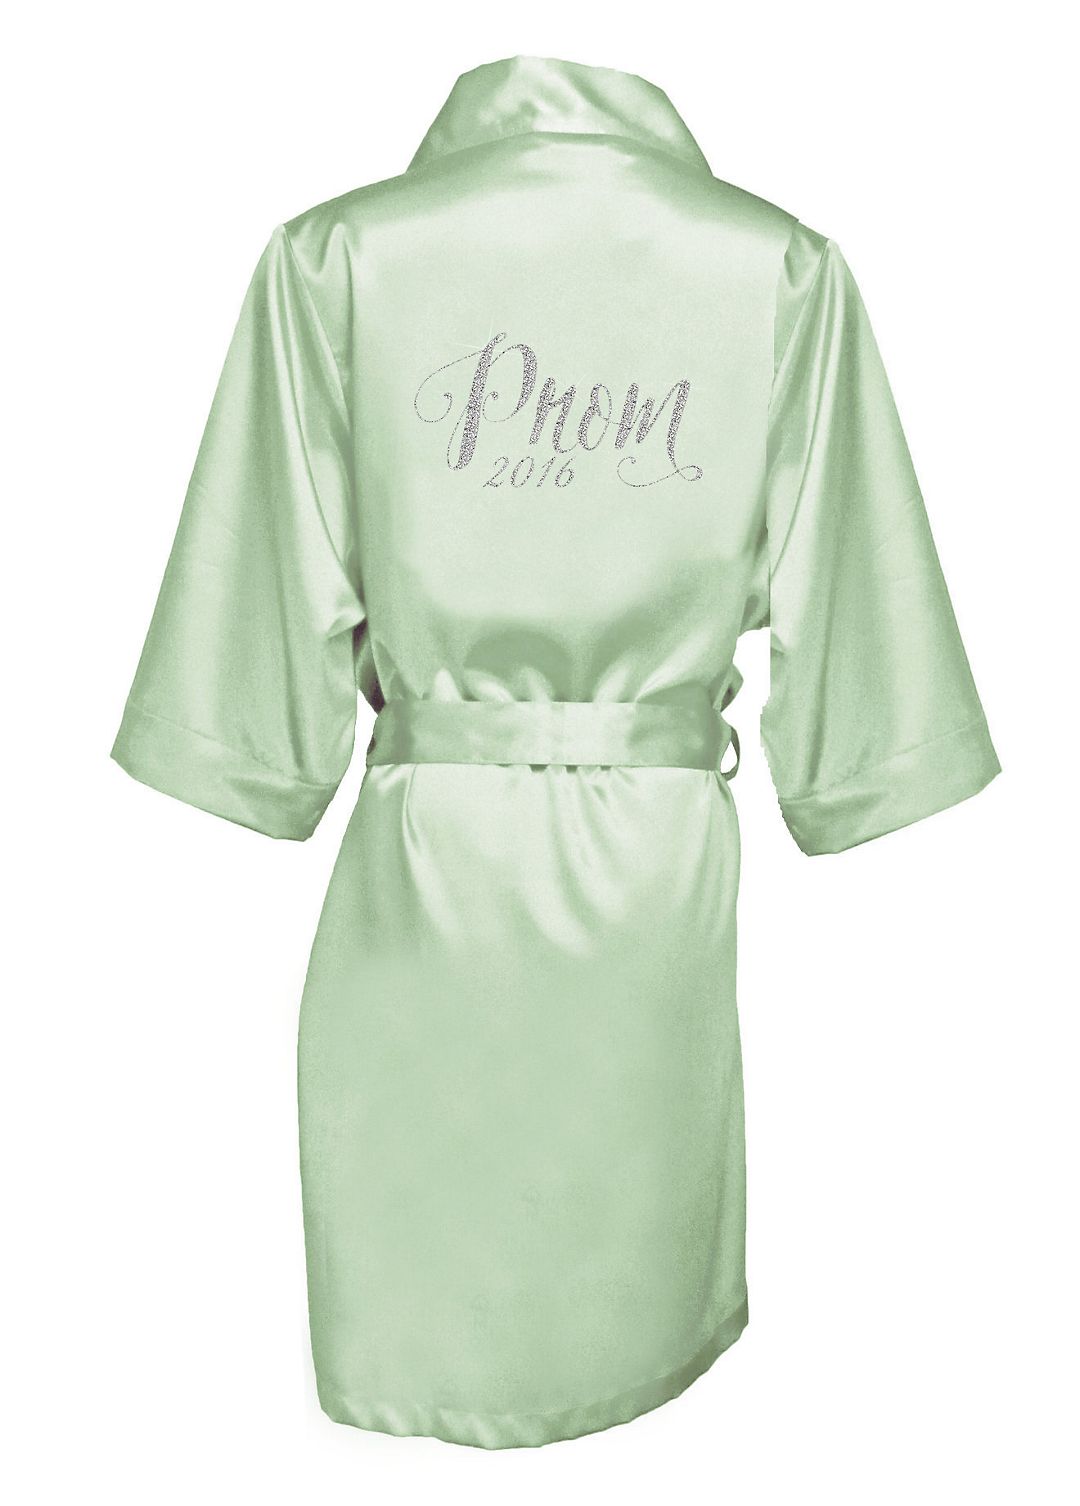 Glitter Print Prom 2016 Robe Image 1